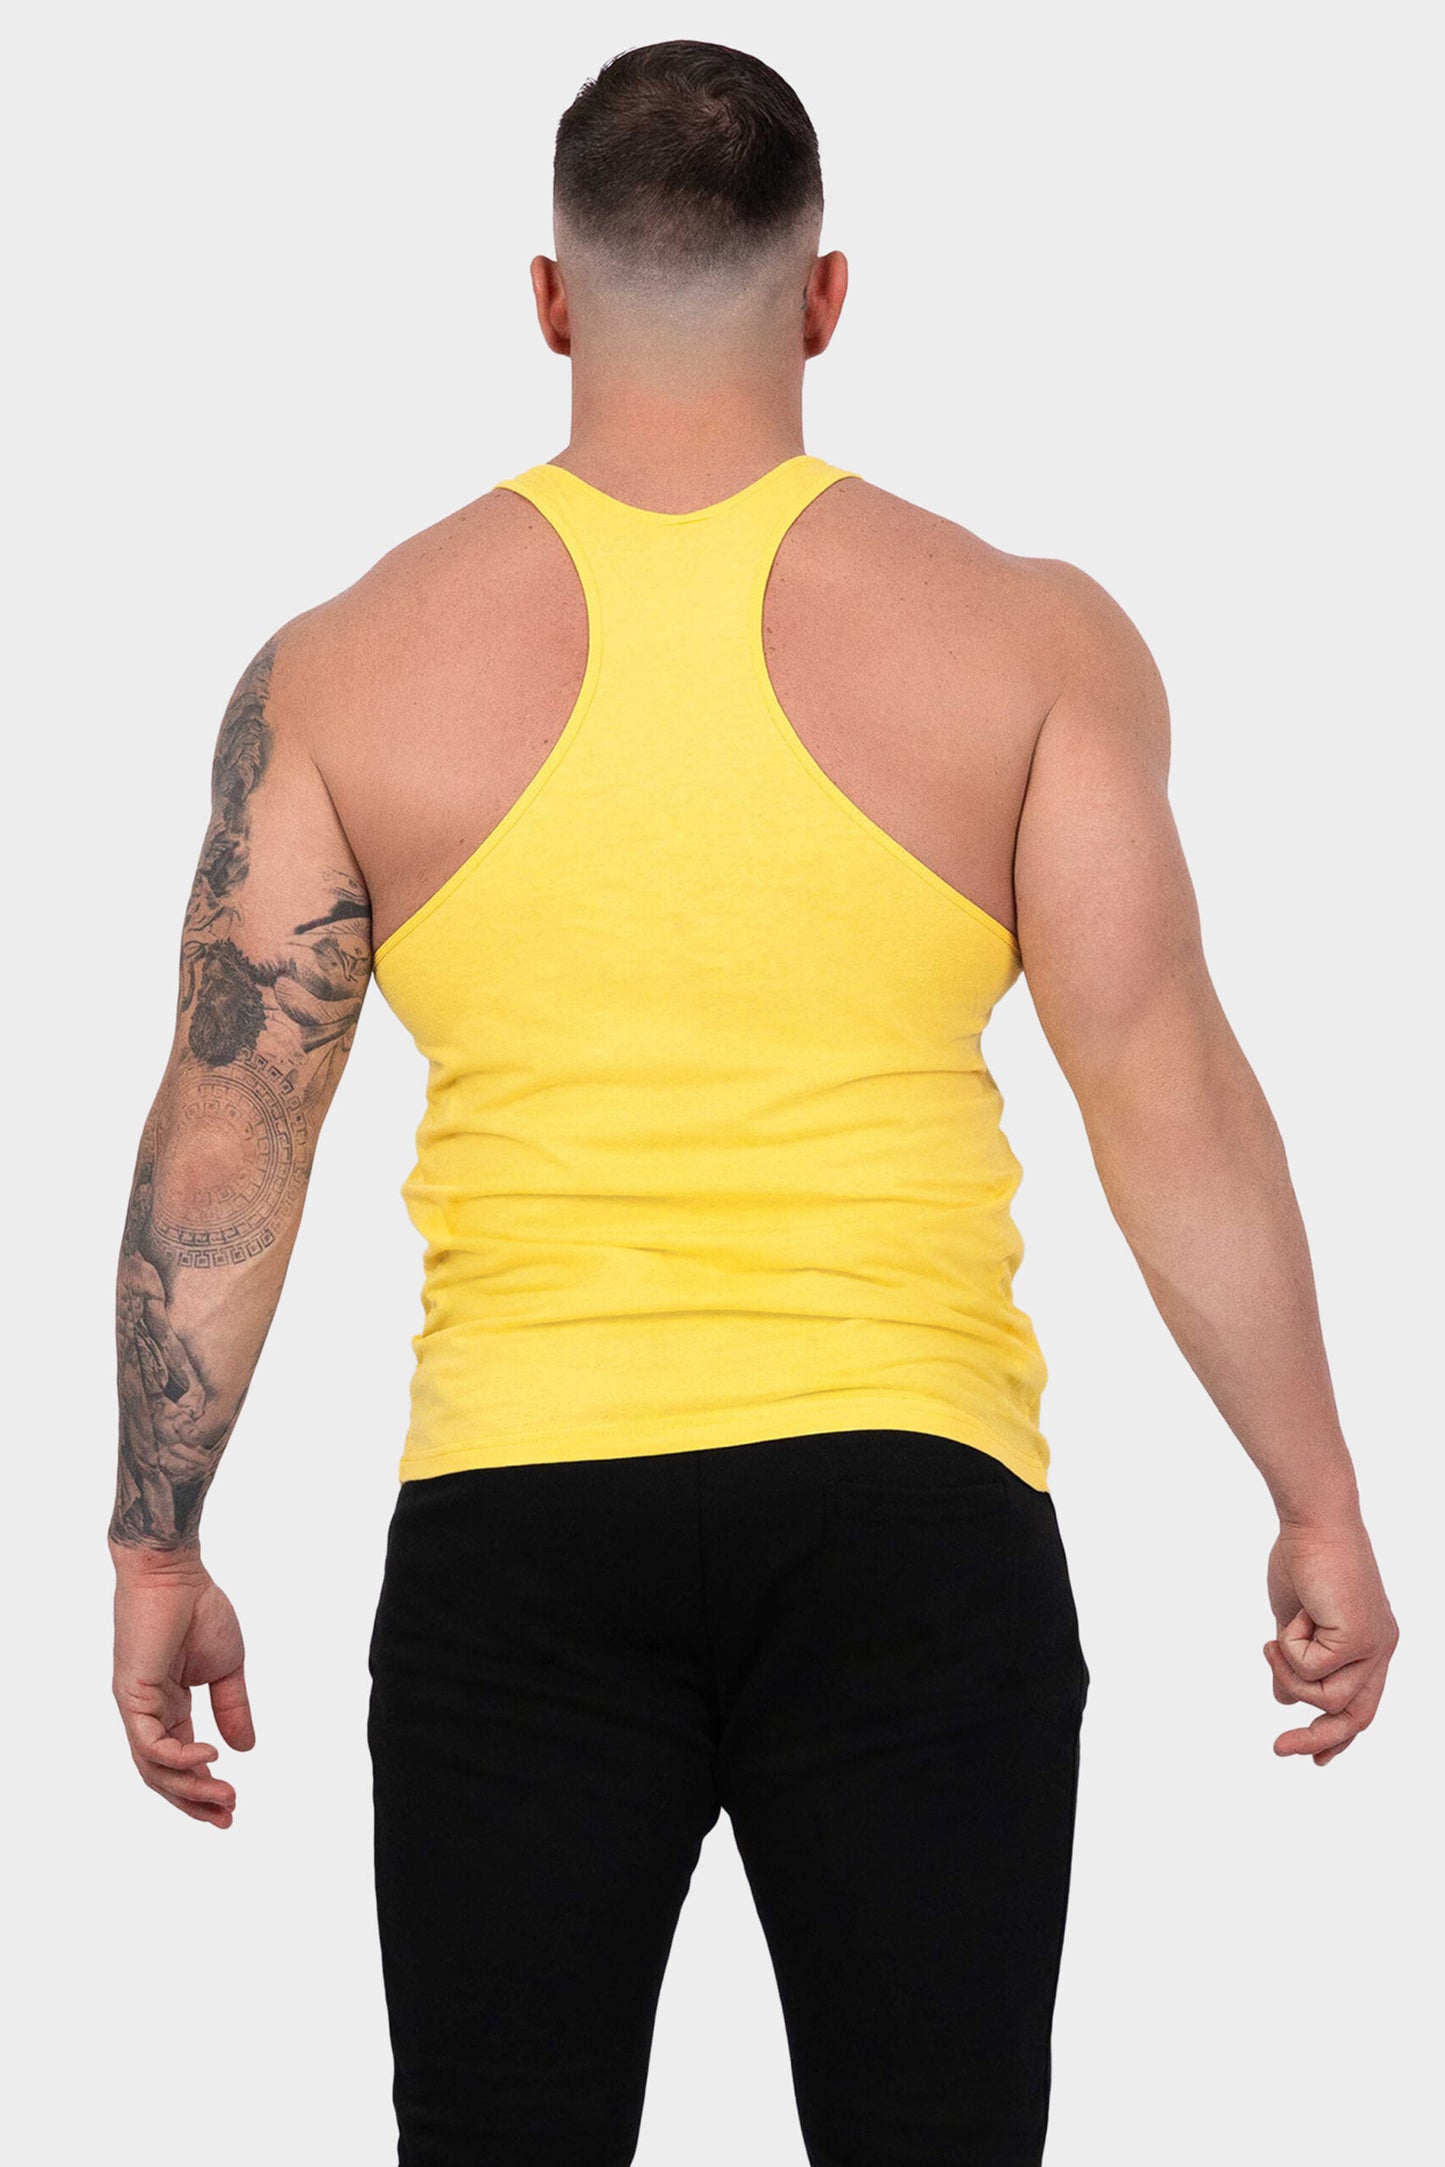 halter-top-yellow-back